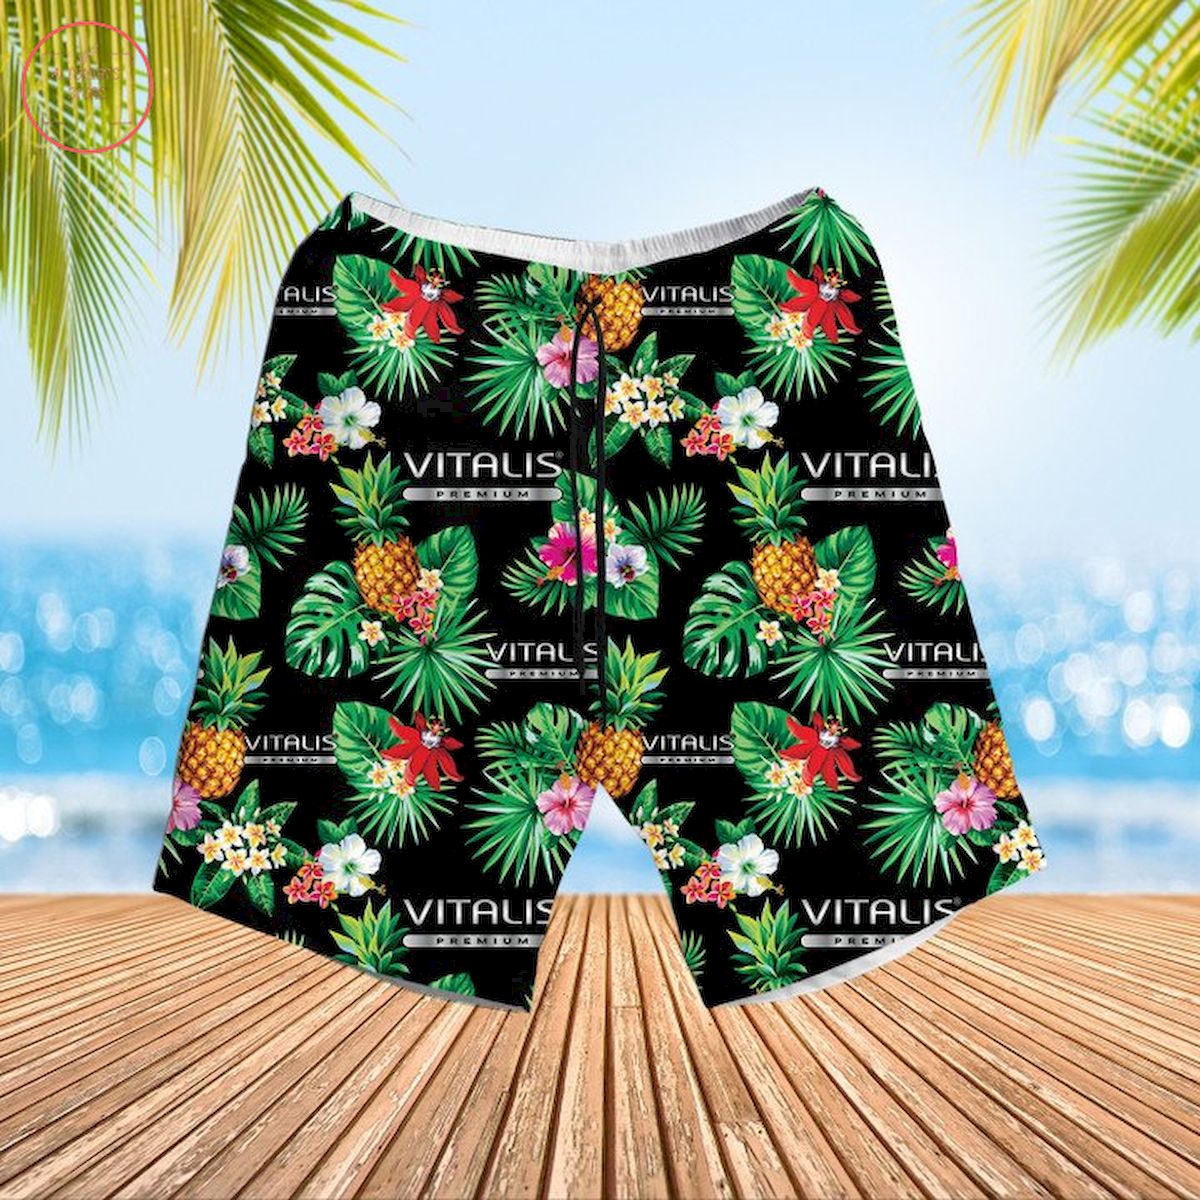 Vitalis Condoms Hawaiian Shirt and Shorts